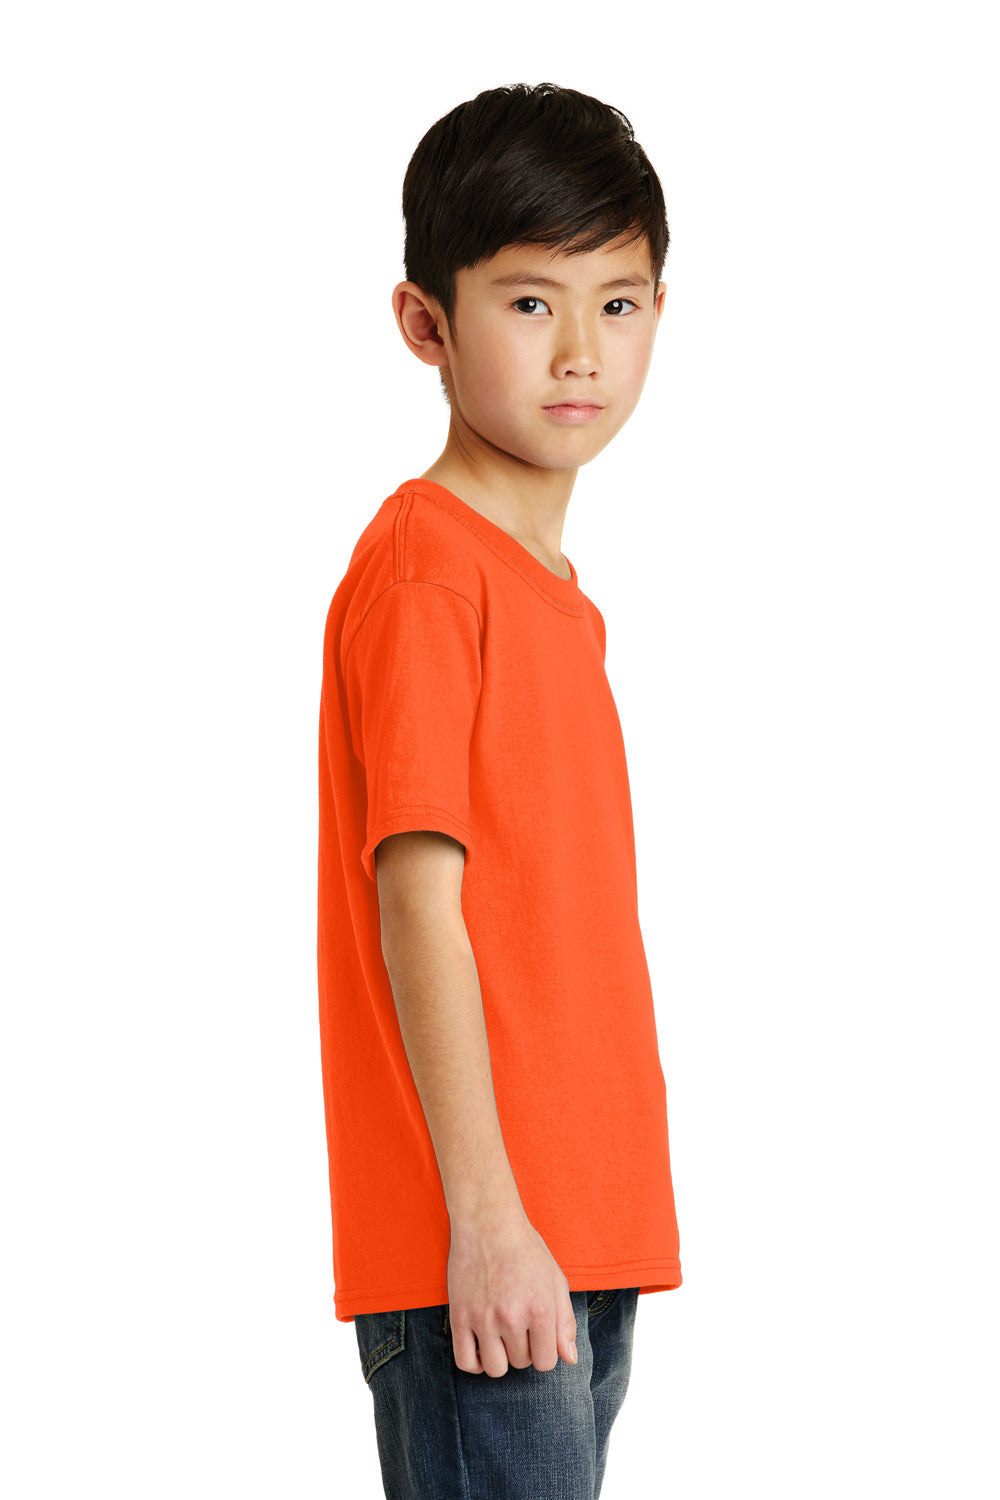 Port & Company PC55Y Youth Core Short Sleeve Crewneck T-Shirt Safety Orange Side